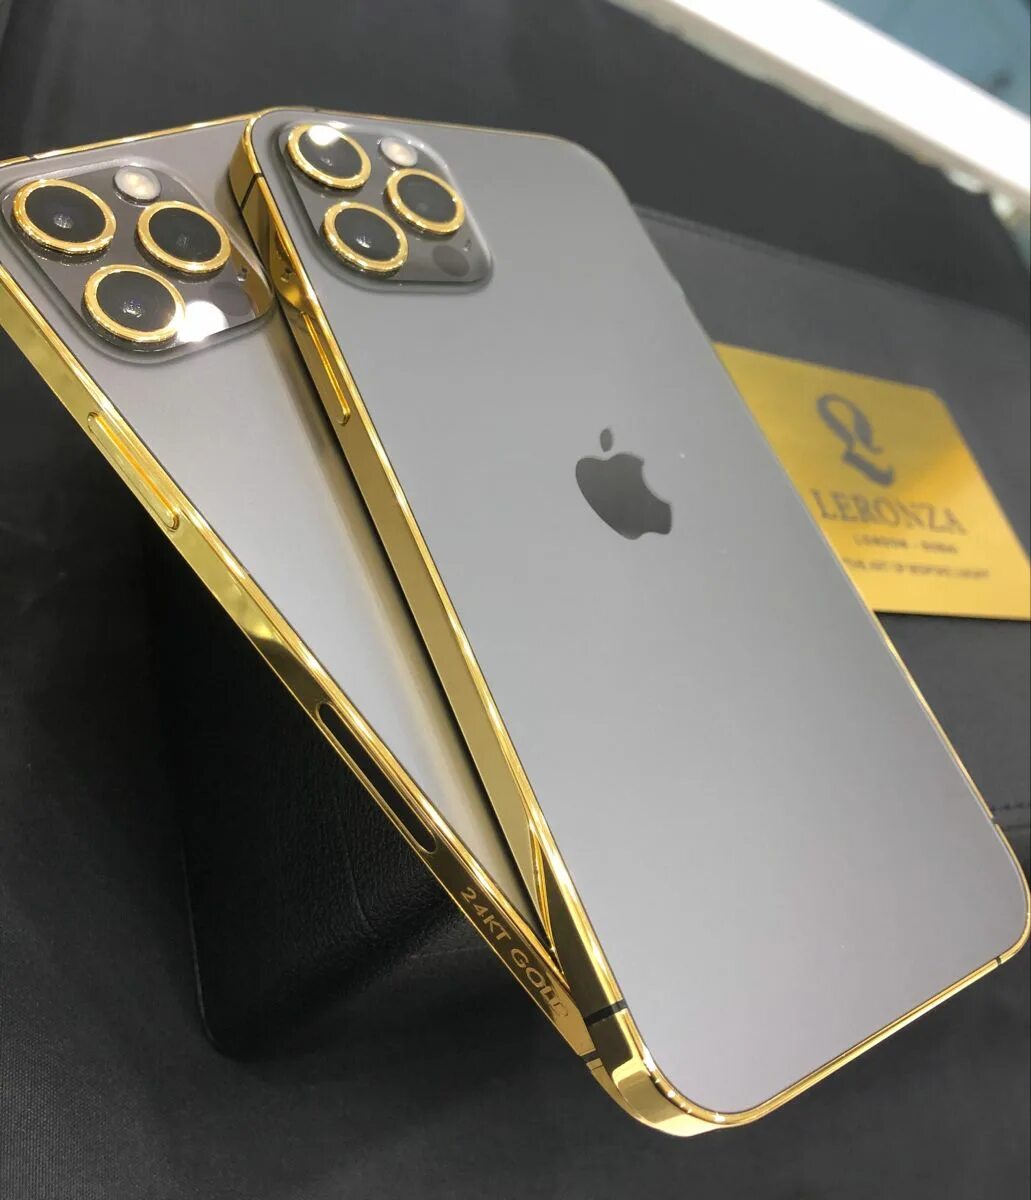 Iphone 12 Pro Gold. Iphone 24k Gold. Айфон 12 Промакс золотой. Iphone 12 Pro Max золотой.